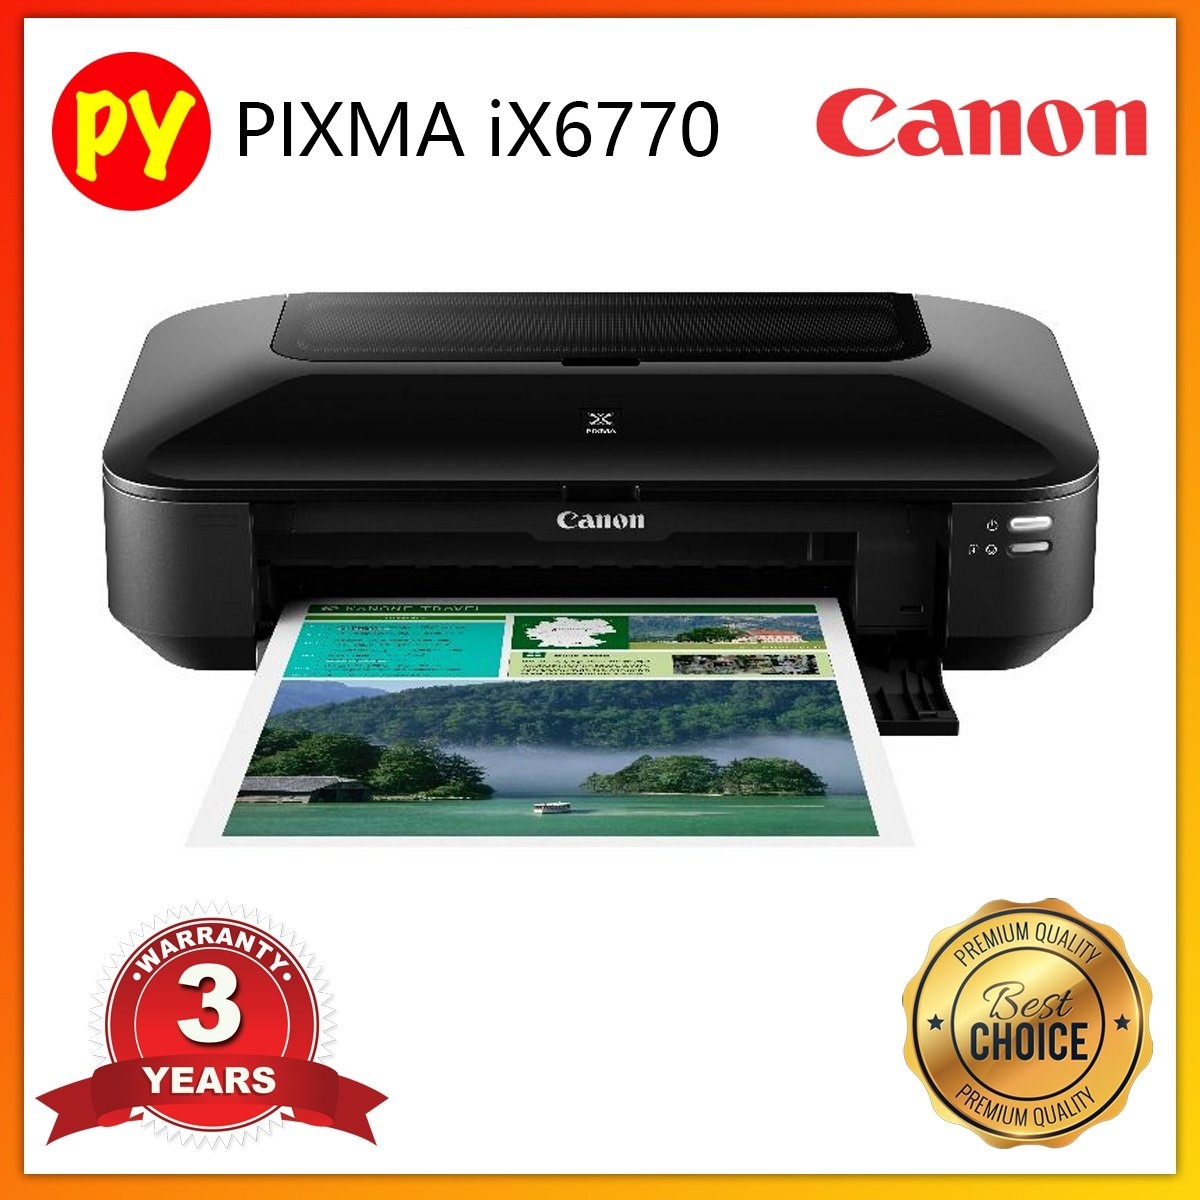 Canon Pixma ix6770 - Colour Only/A3/5-Ink) CANON INKJET Kuala Lumpur, Jalan